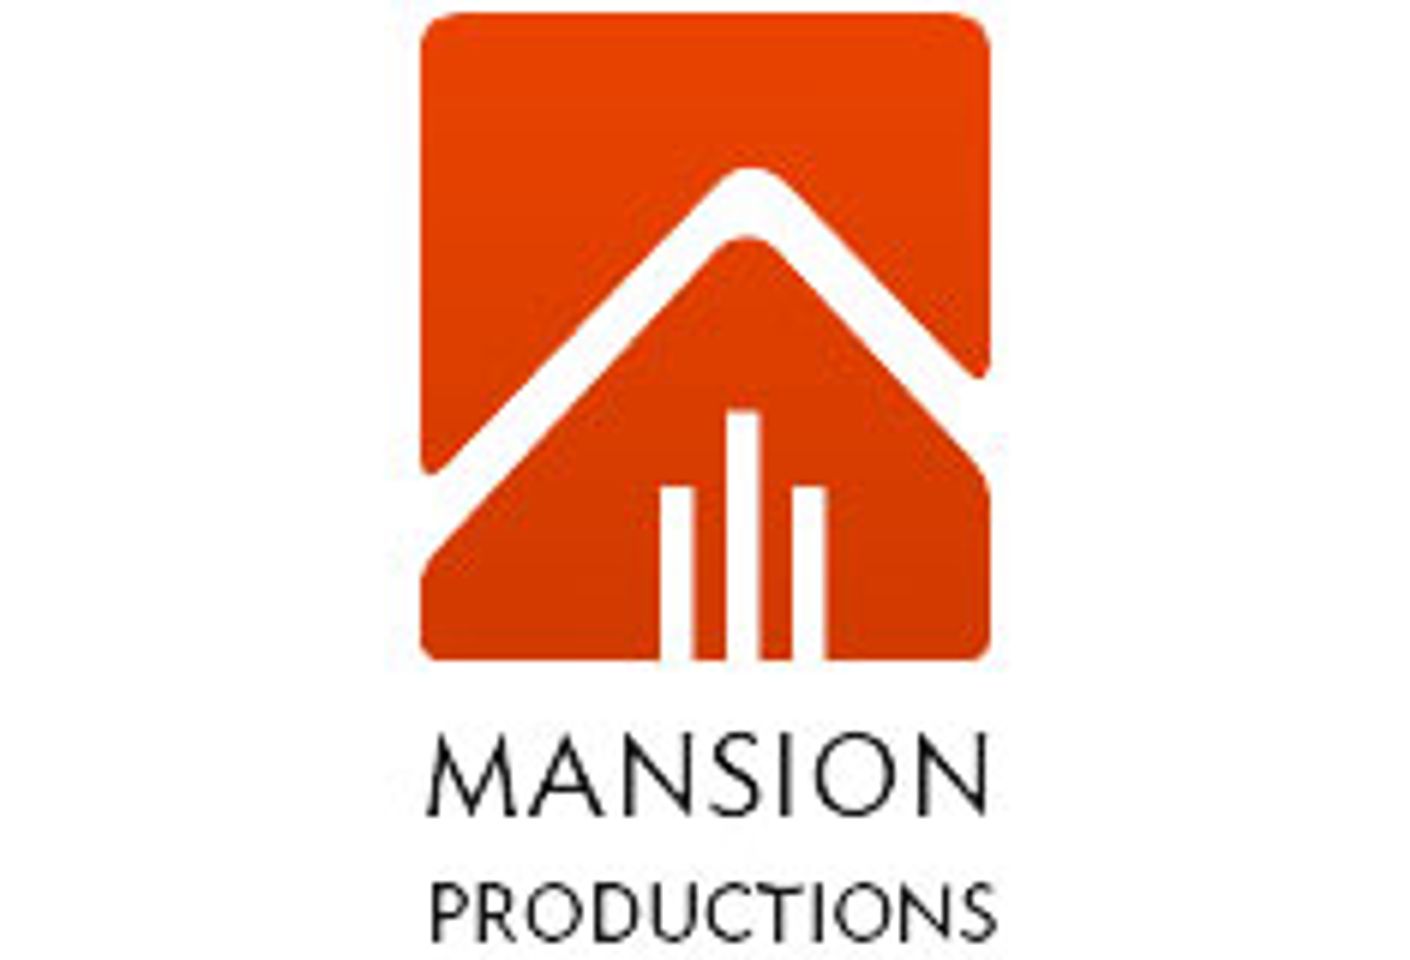 Mansion Productions’ MAS V2 Entering Beta